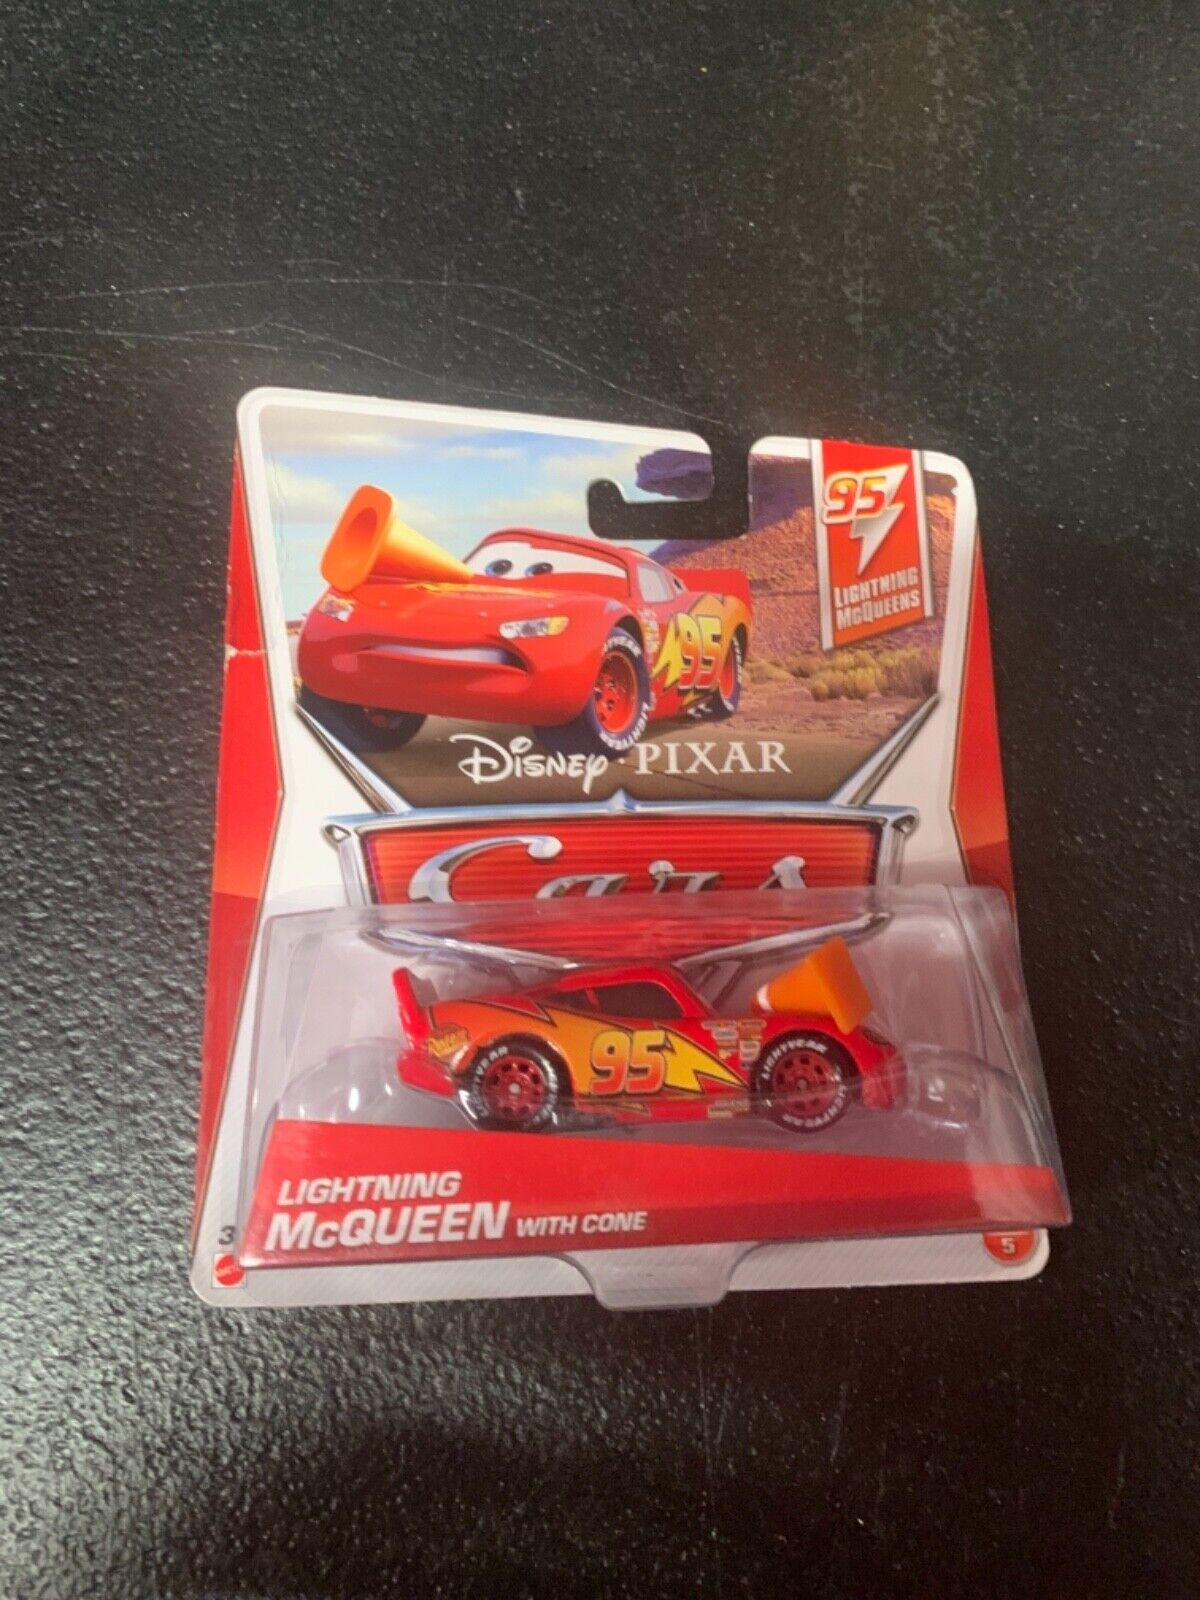 Disney Pixar Cars Lightning McQueen with Cone